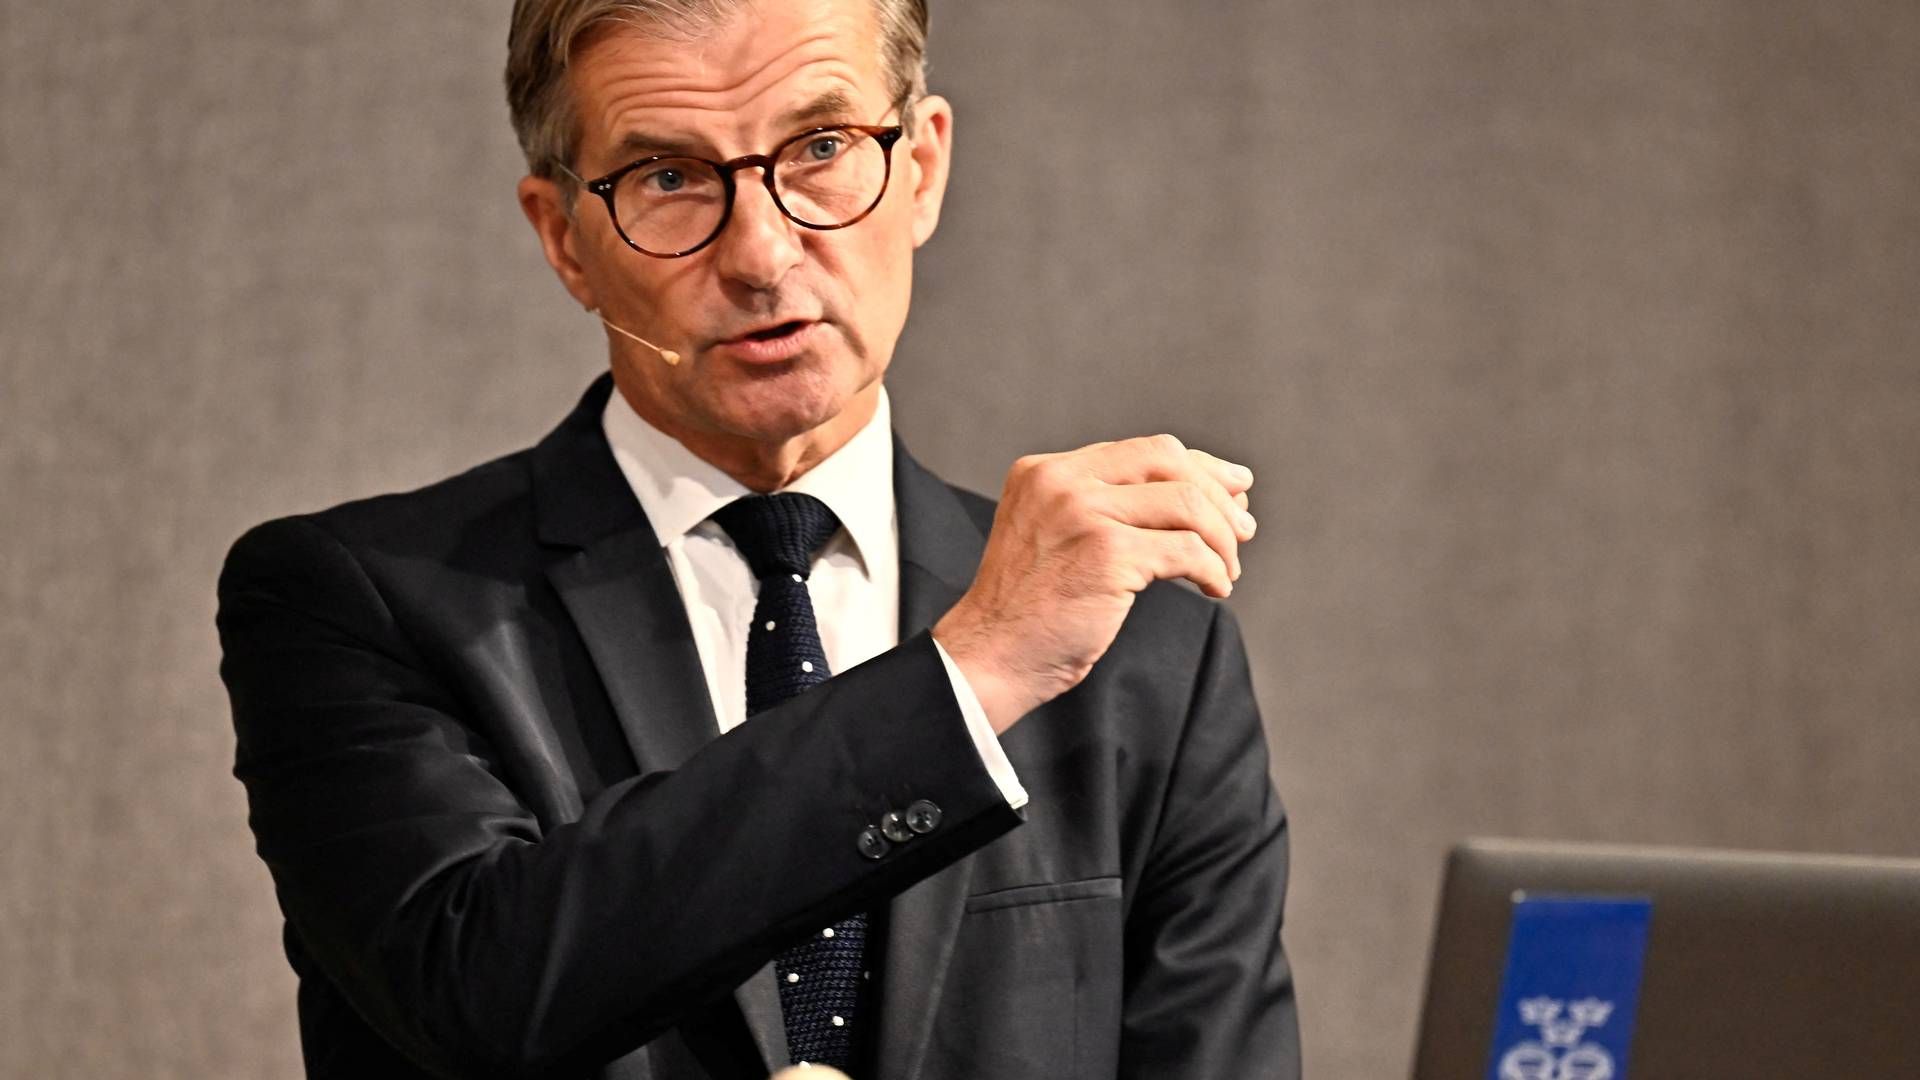 Erik Thedéen er centralbankchef for Sveriges Riksbank. | Foto: TT News Agency/Reuters/Ritzau Scanpix